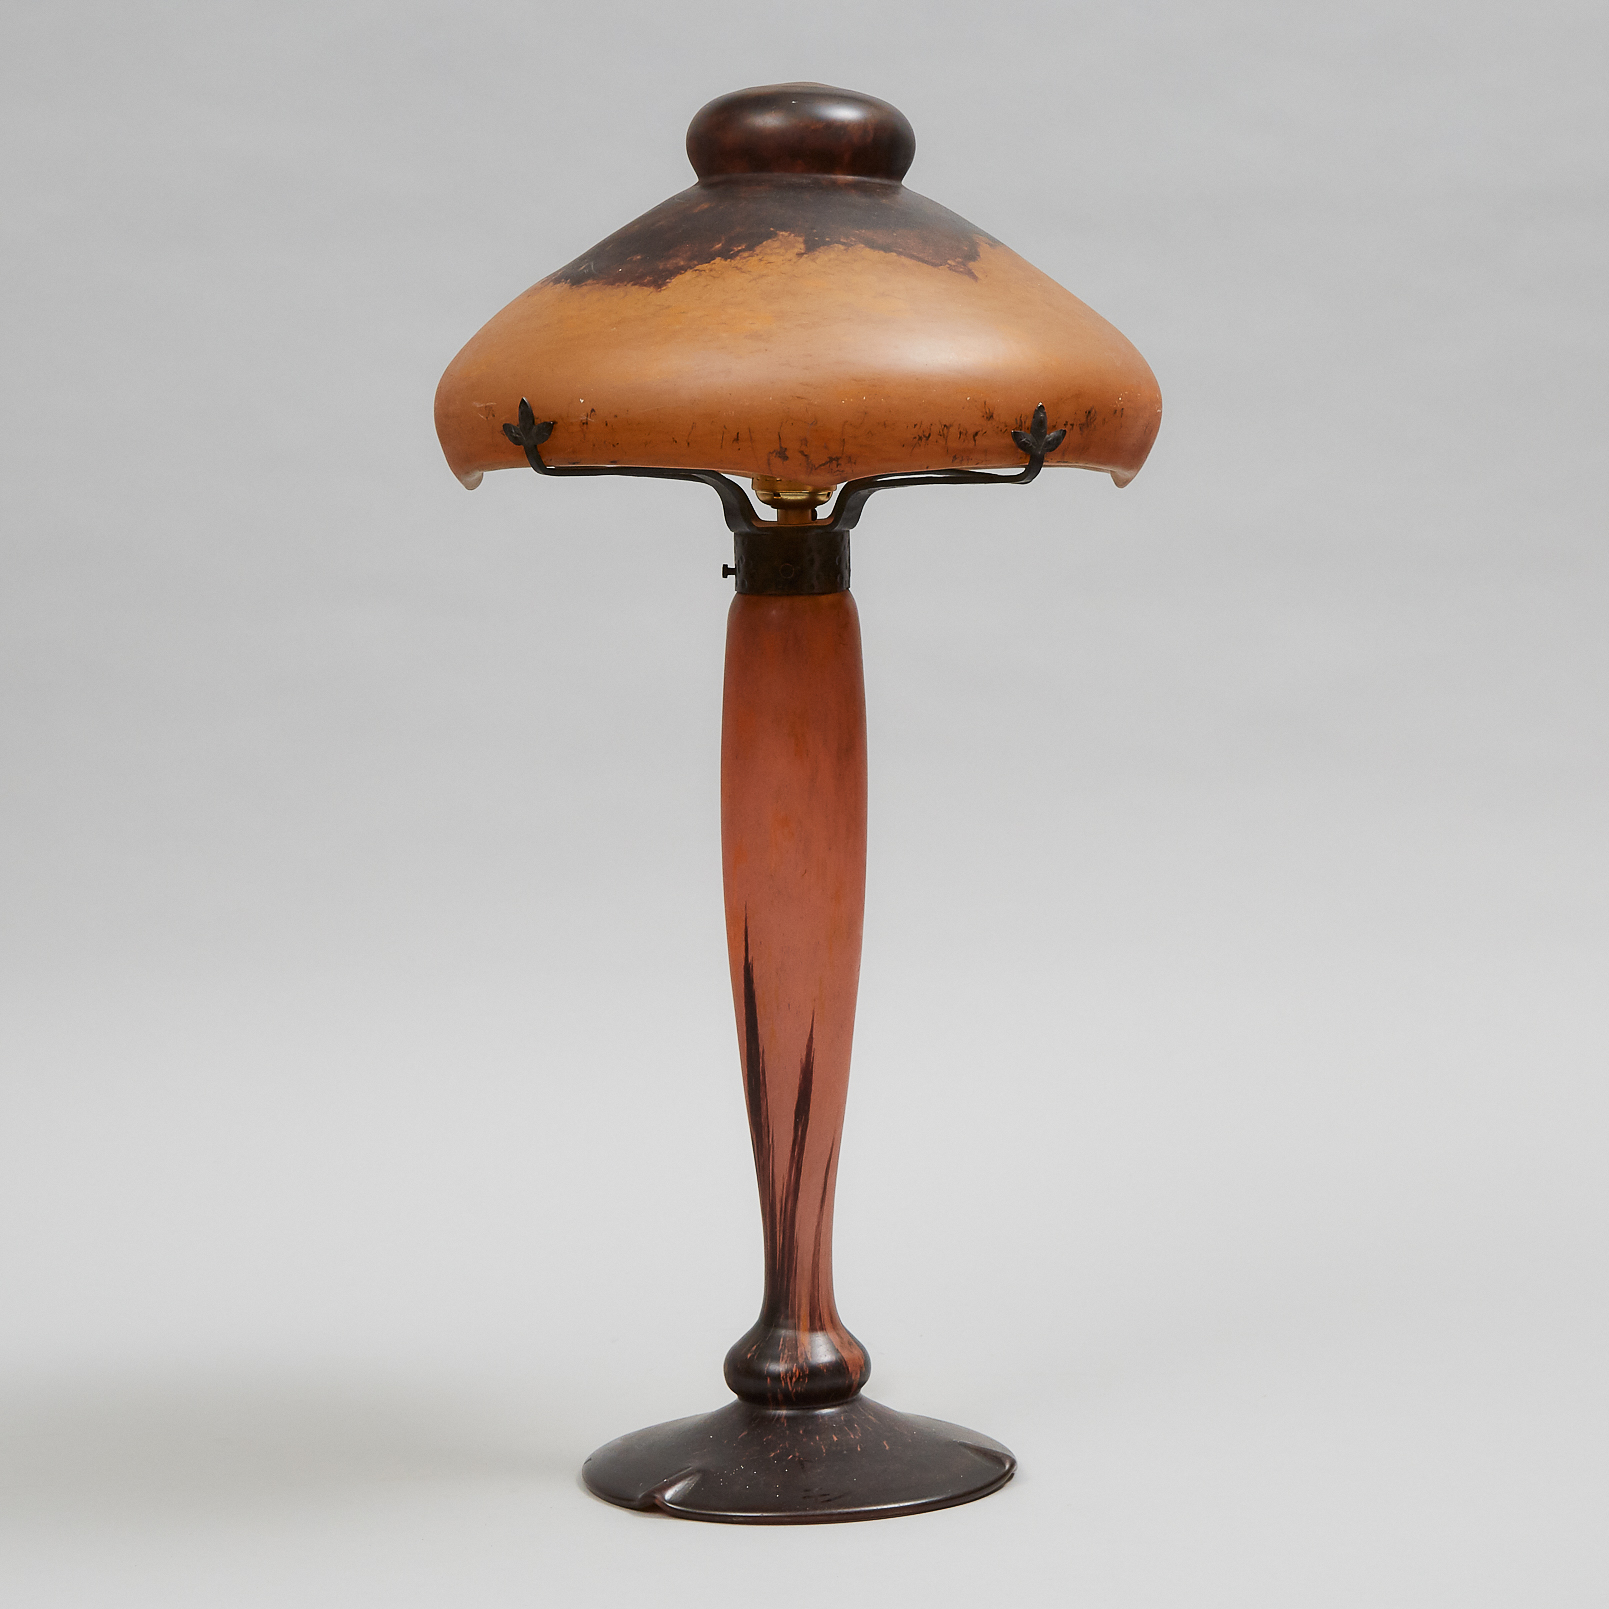 Daum Mottled Glass Table Lamp, c.1910